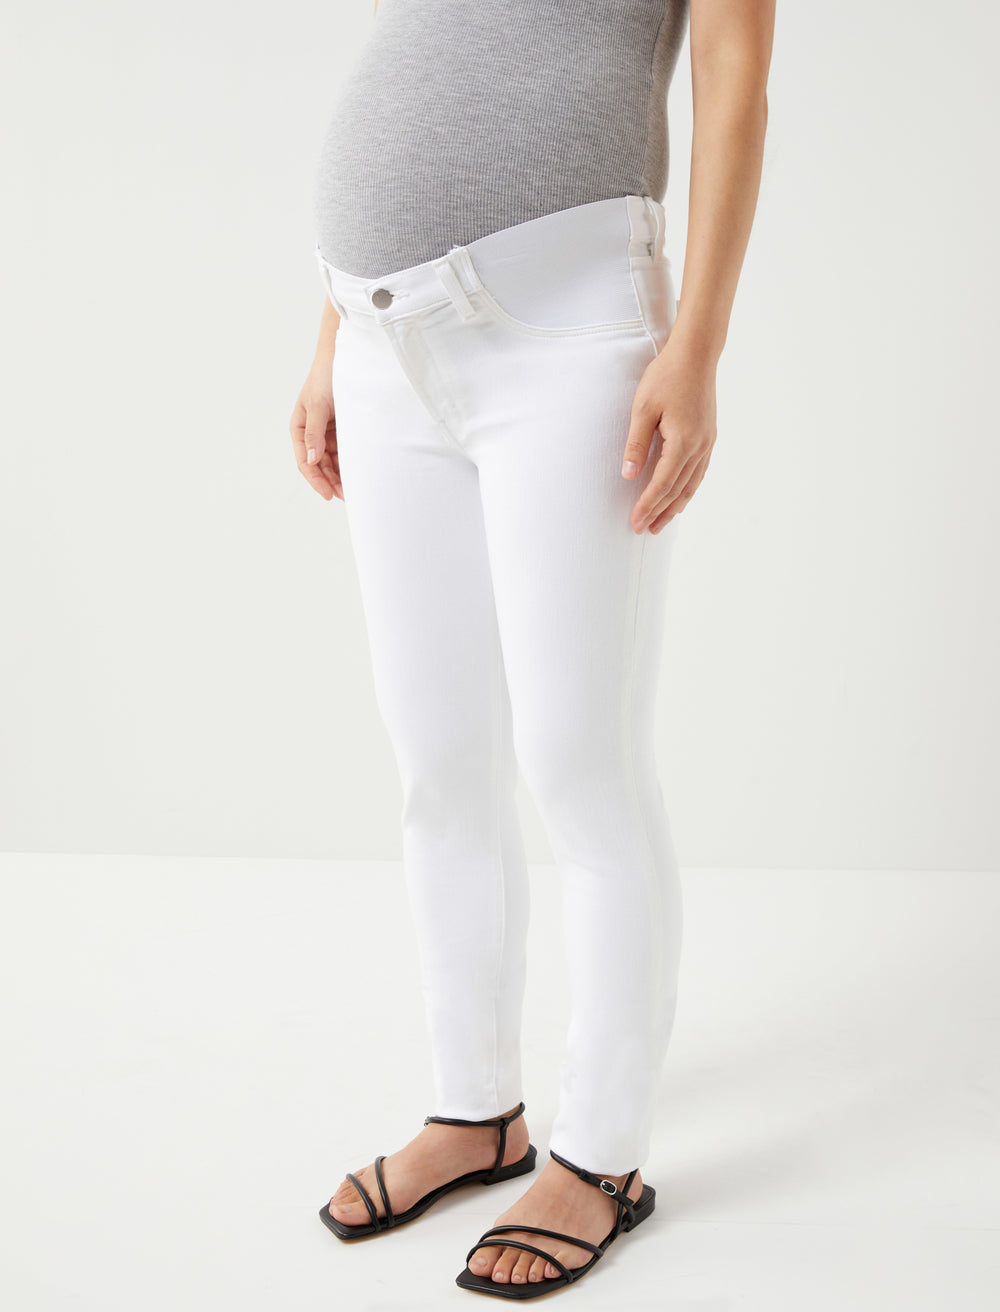 J Brand, Pants & Jumpsuits, J Brand Maternity Jeans Size 3